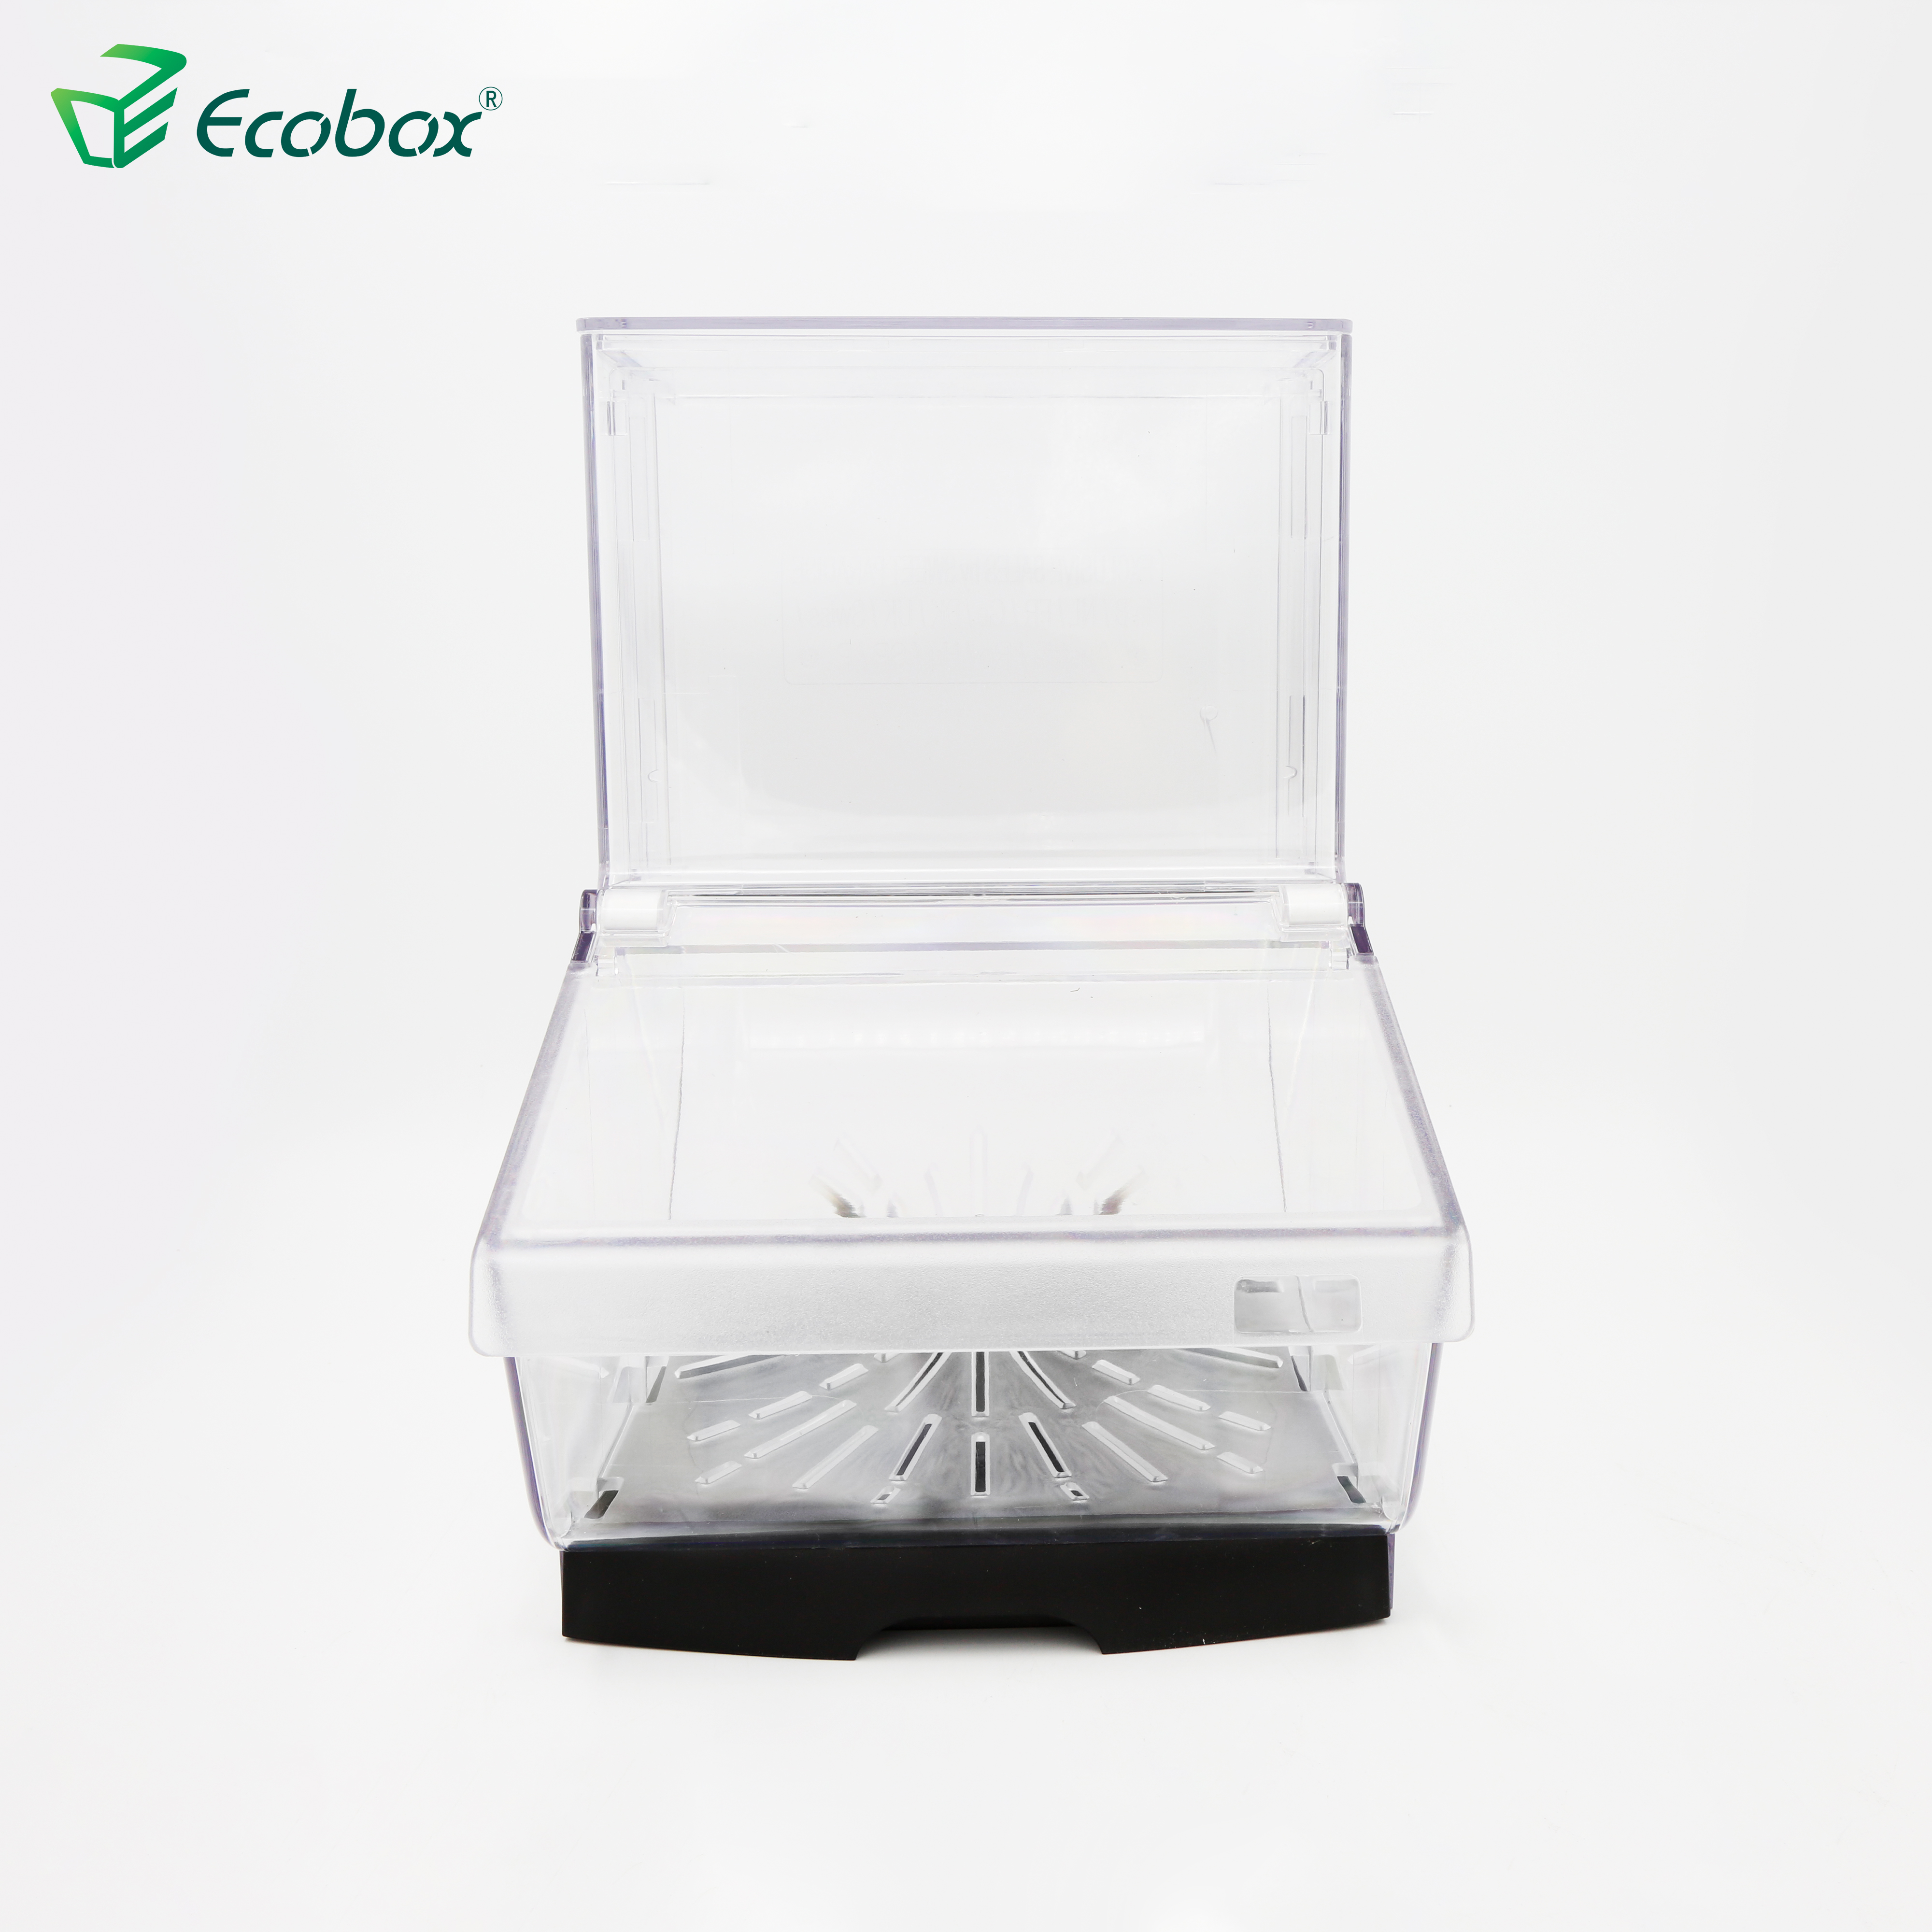 Ecobox SPH-004 Scoop Bin